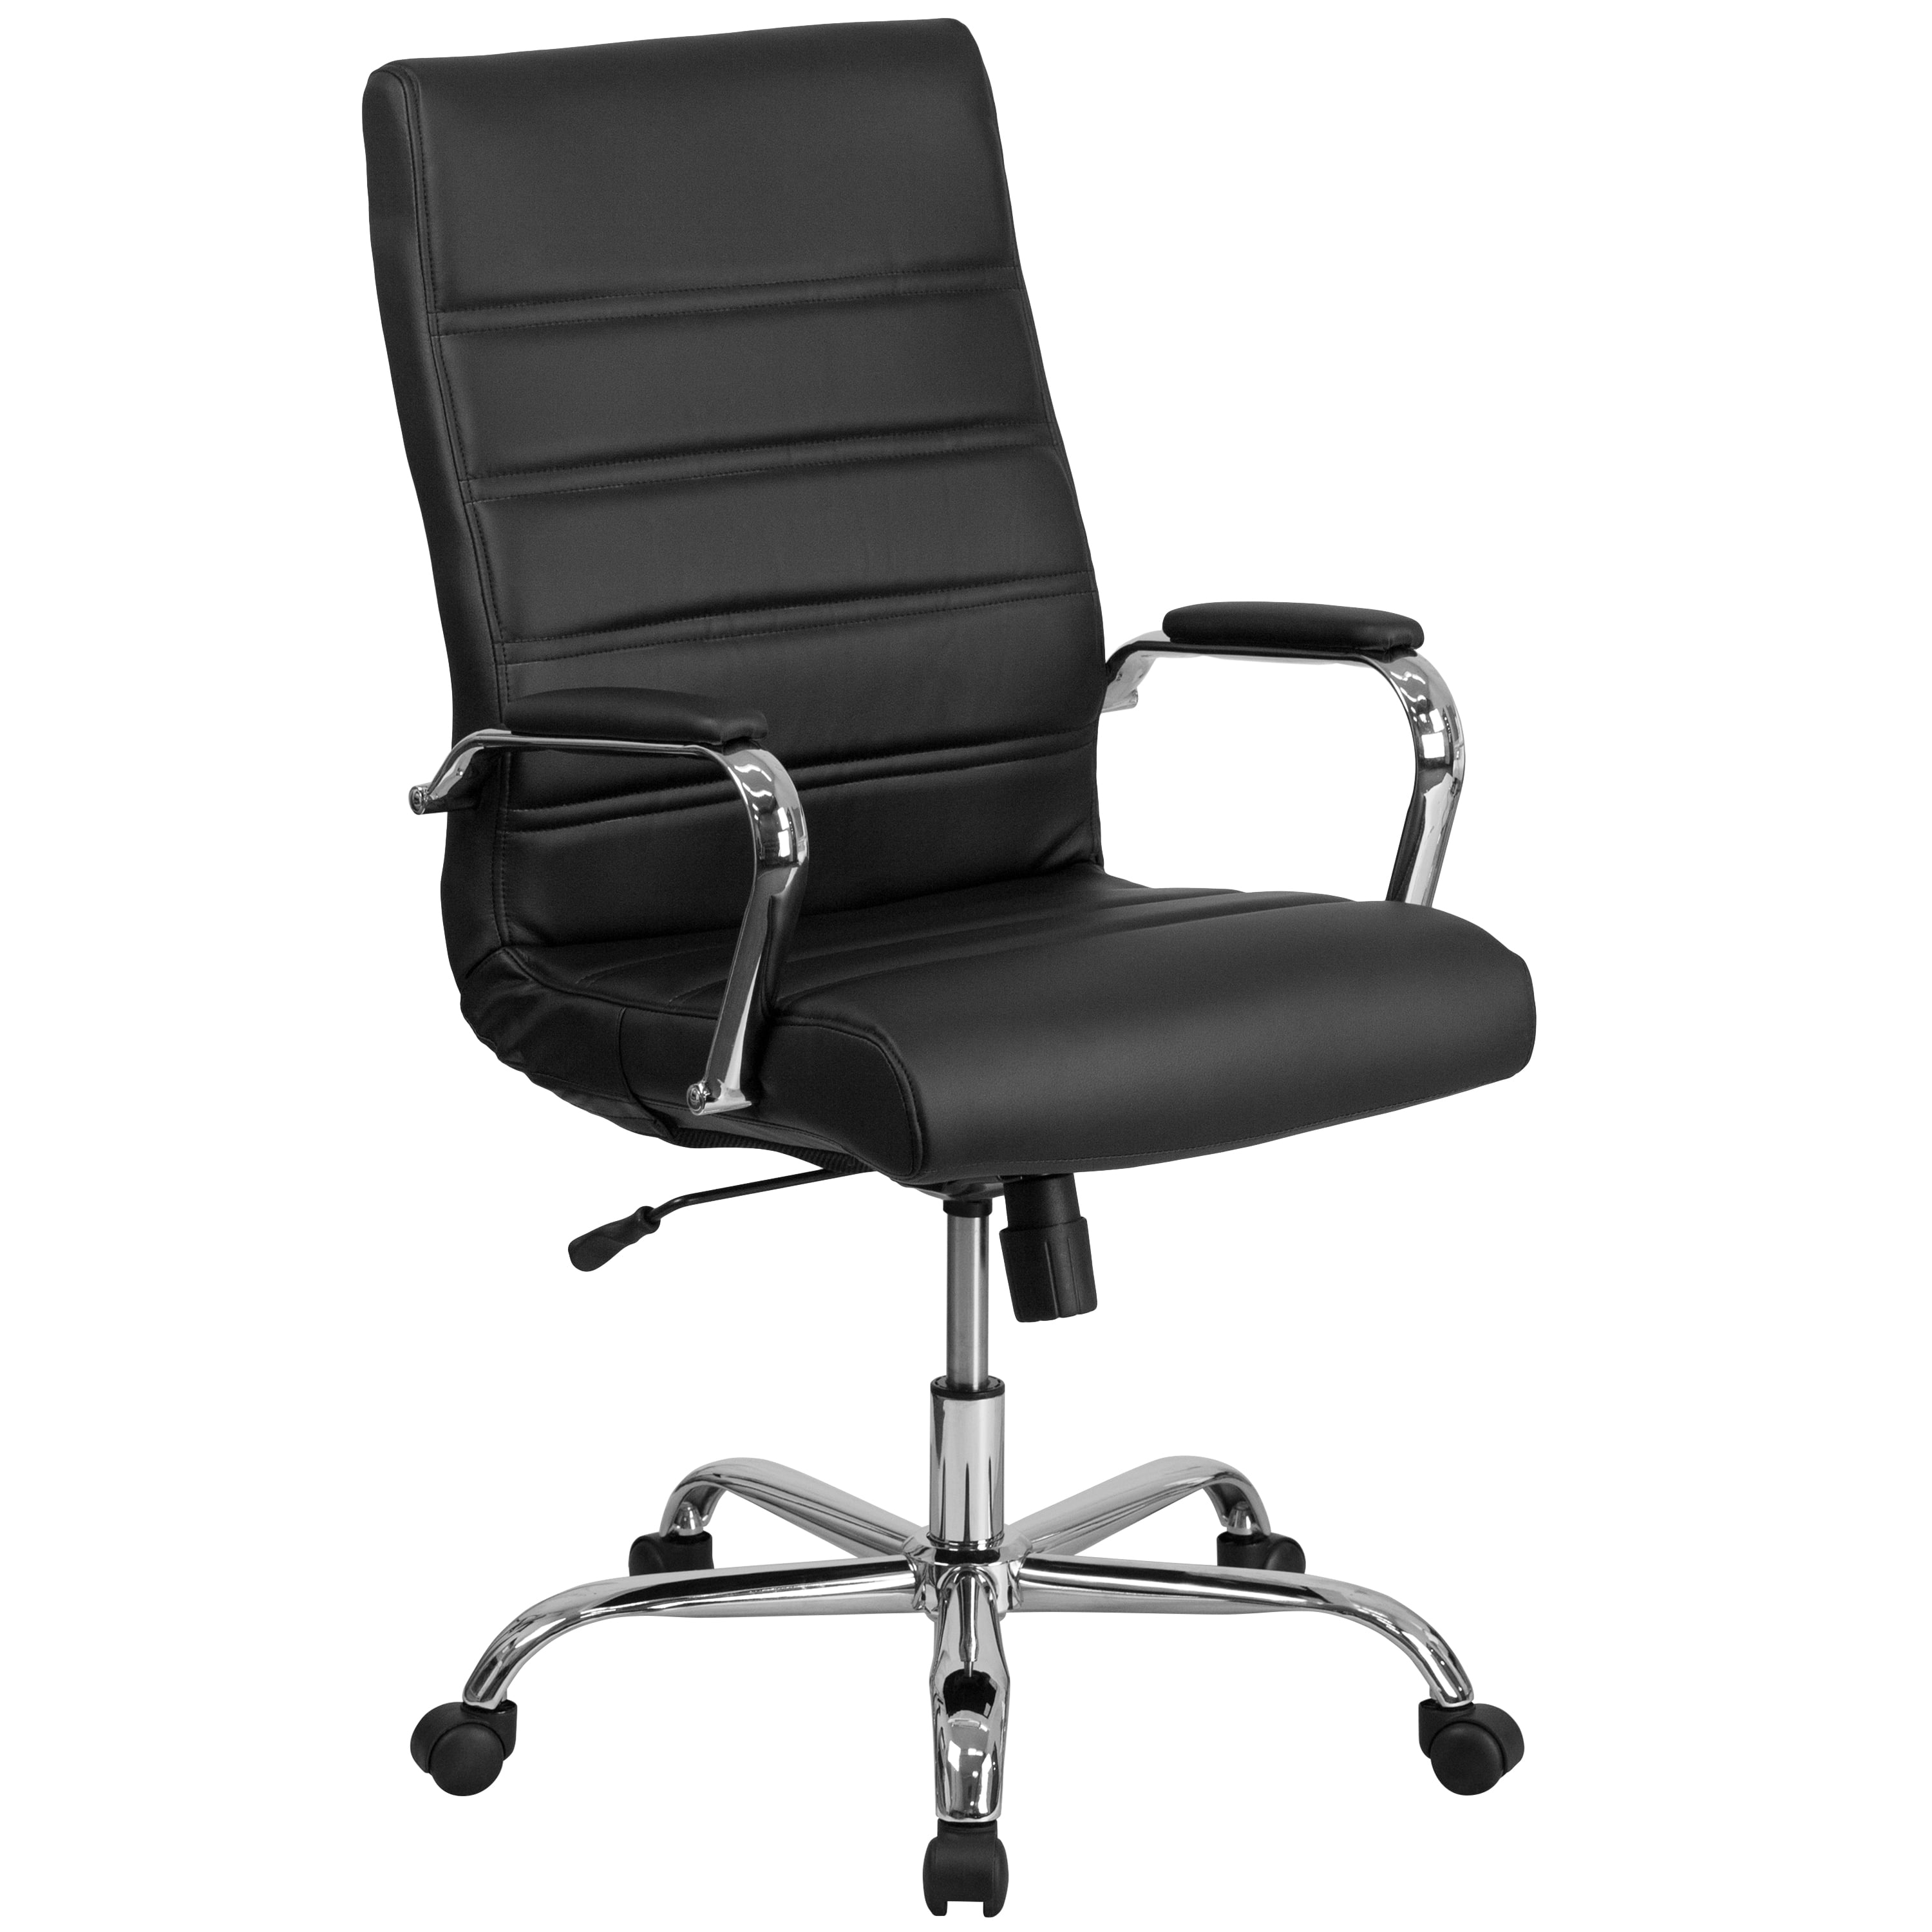 High Back Leathersoft Executive Office Swivel Chair With Wheels Walmart Com Walmart Com